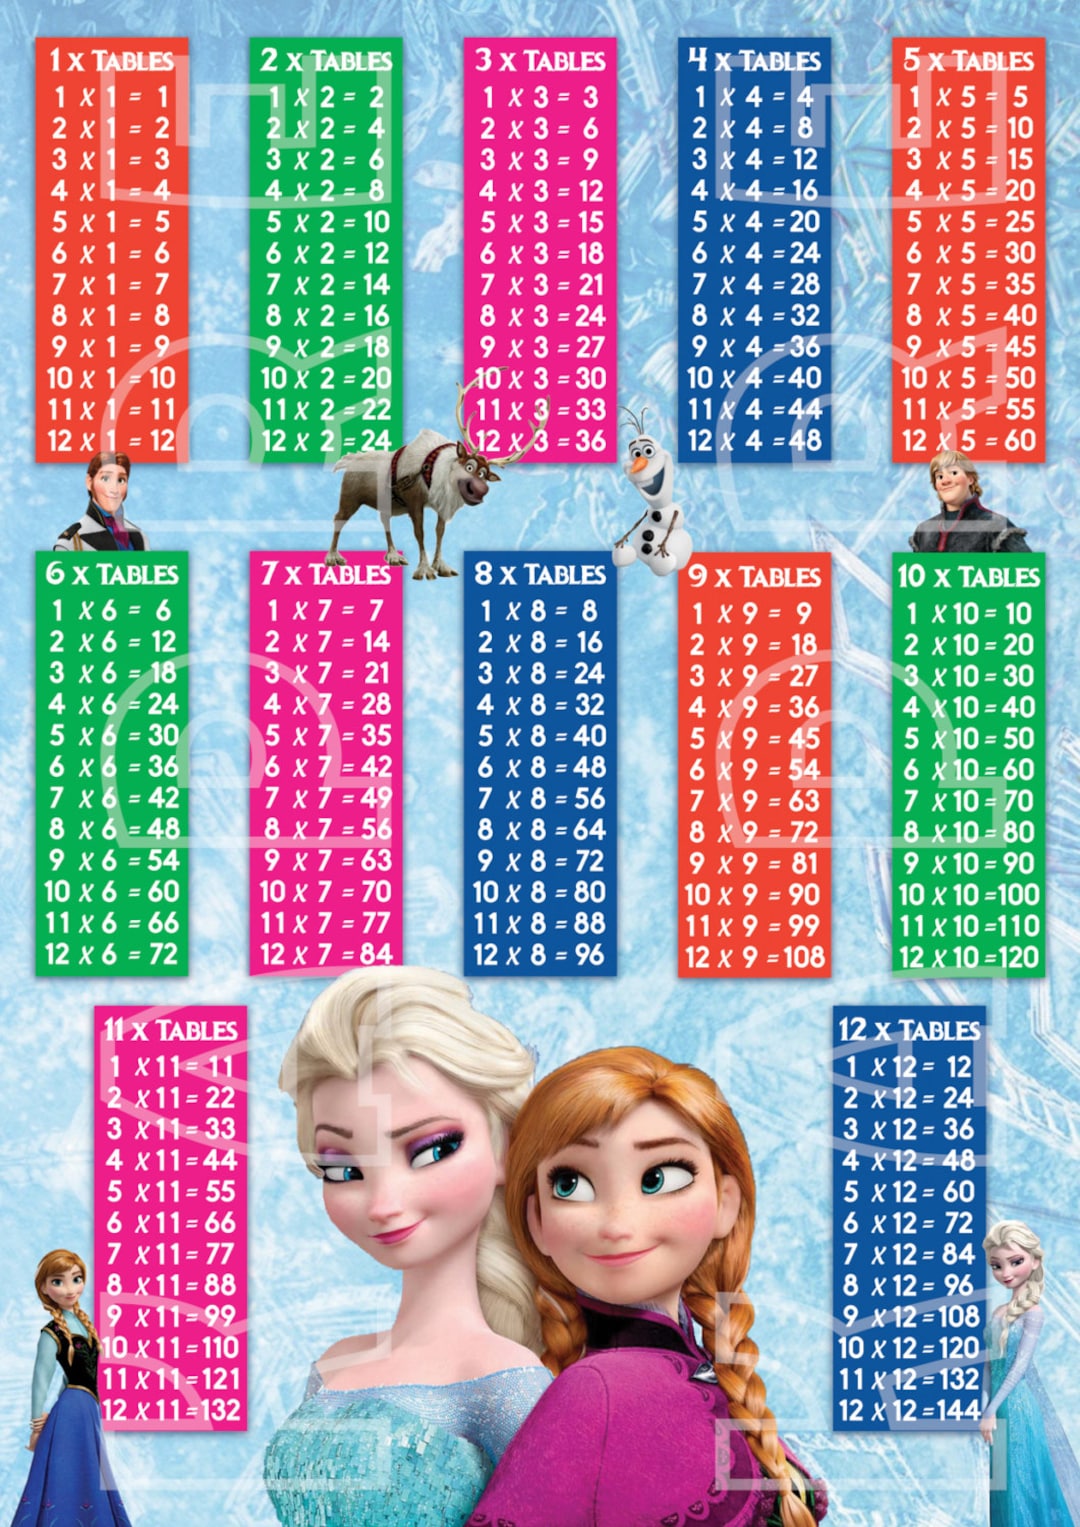 Disney Frozen - Elsa Poster (24 x 36)